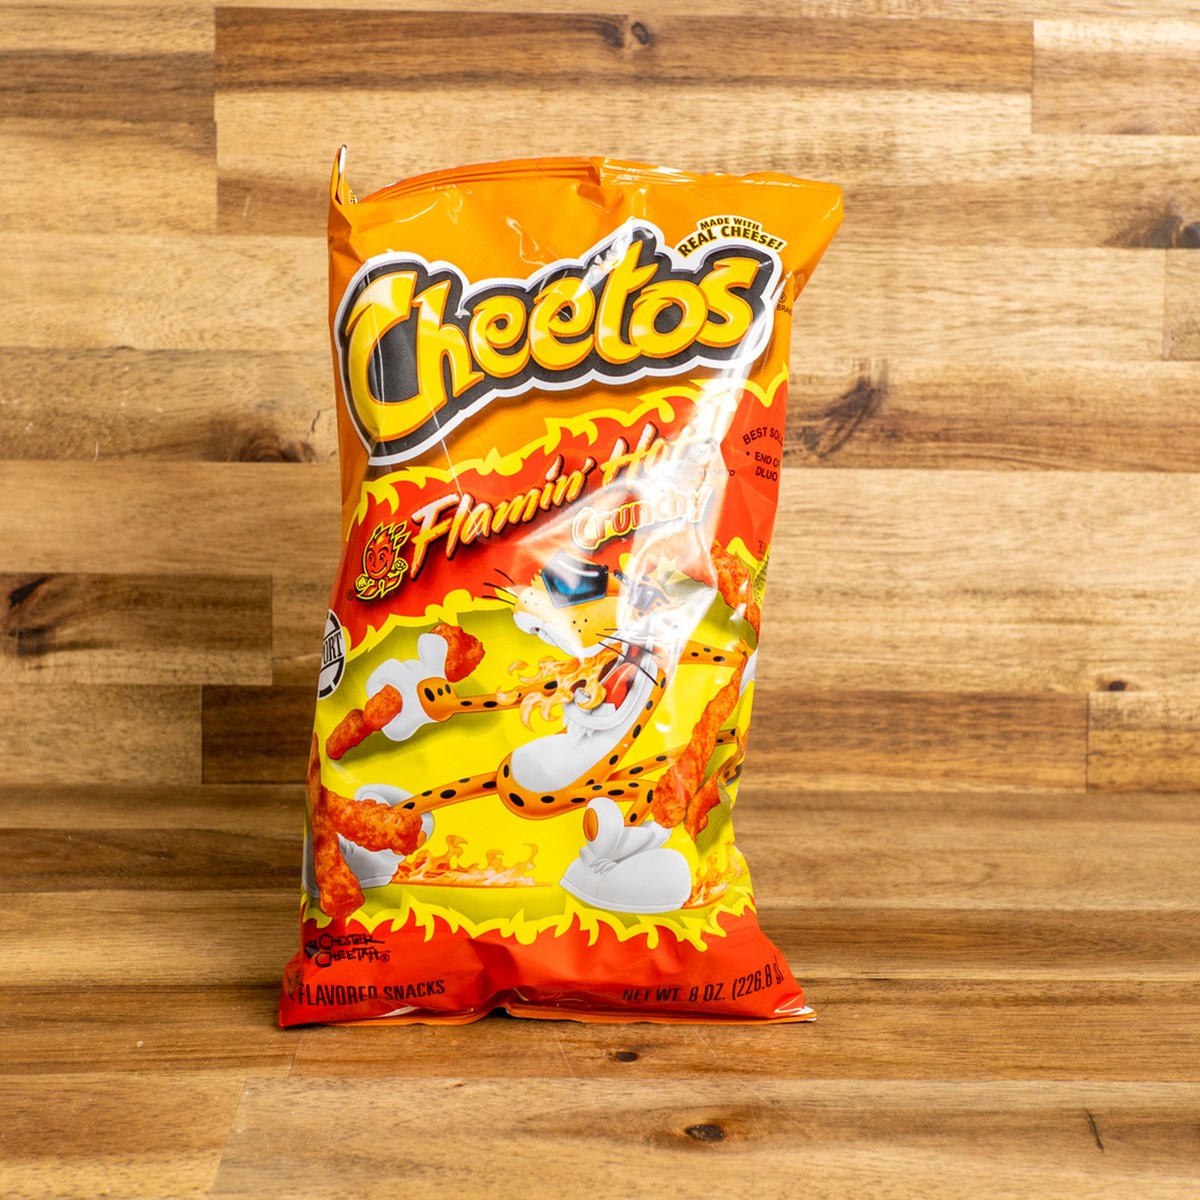 Cheetos Crunchy Cheese Flavored Snacks (16.25 oz.)